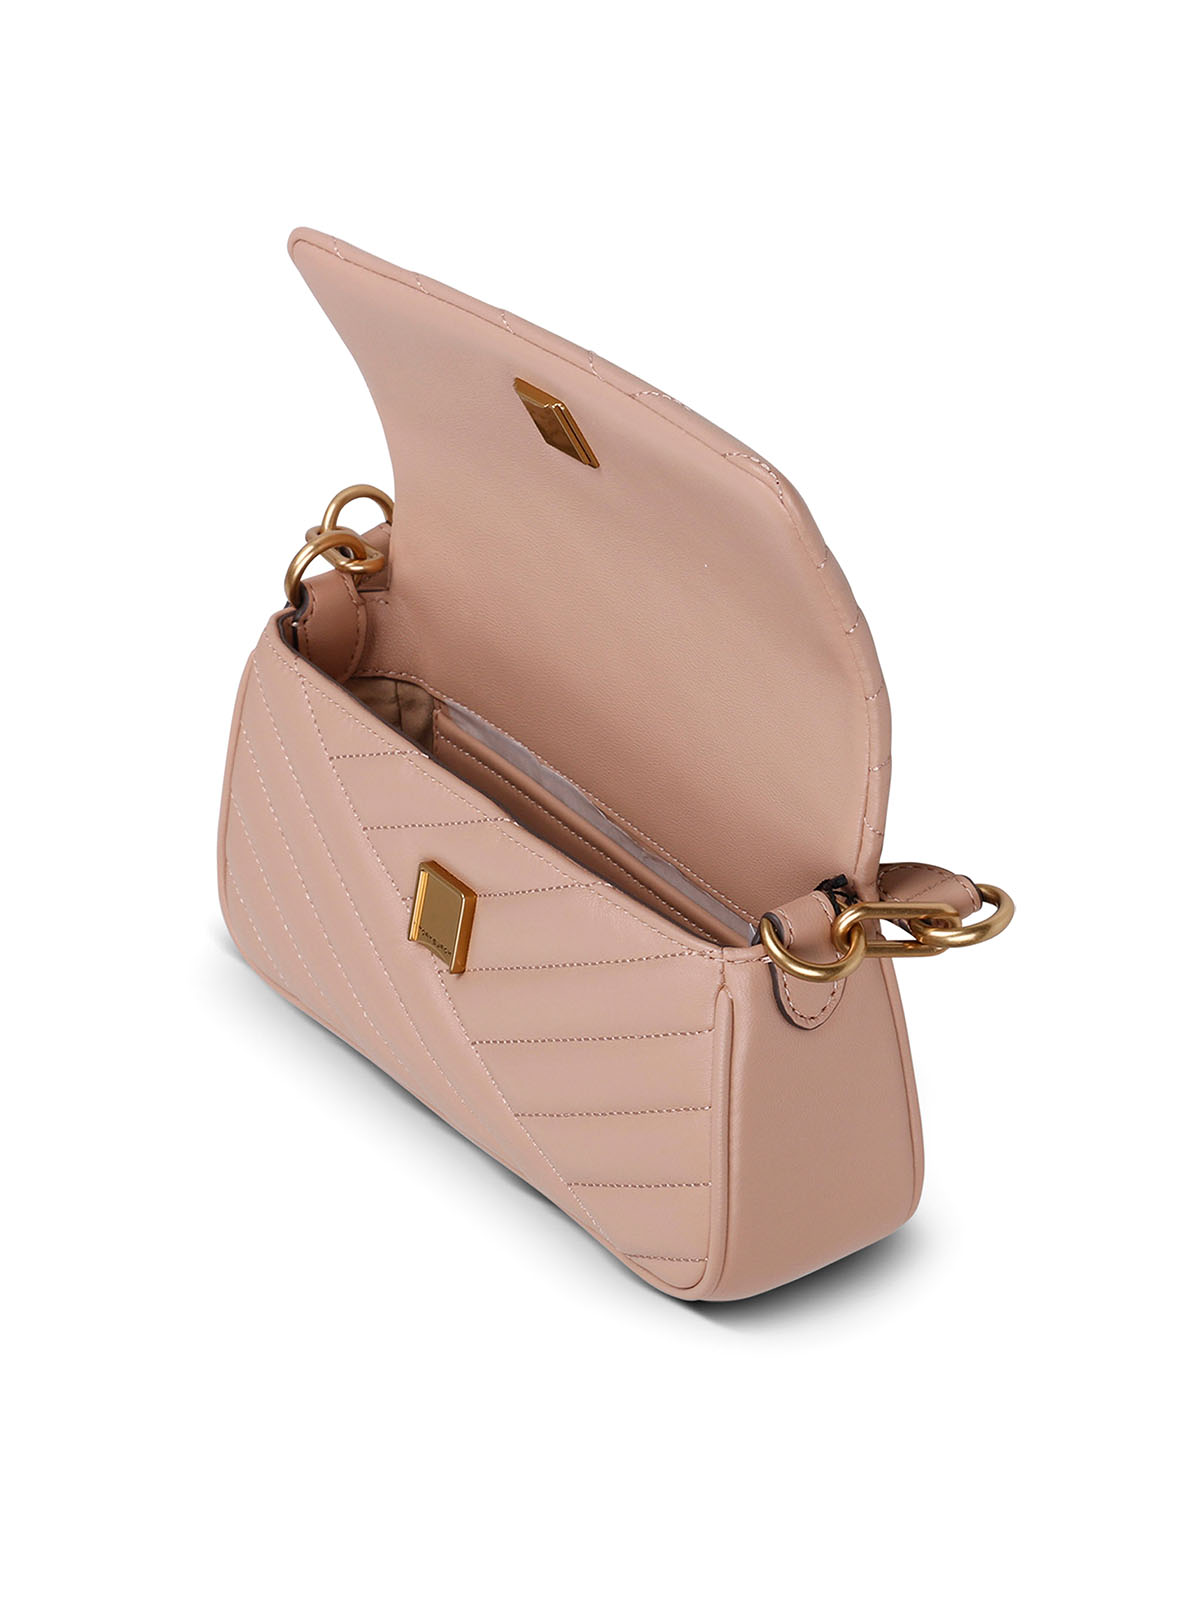 Shop Tory Burch KIRA Shoulder Bags (90456288, 90456 288, 90456, KIRA SMALL  CHEVRON LEATHER BAG) by CiaoItalia